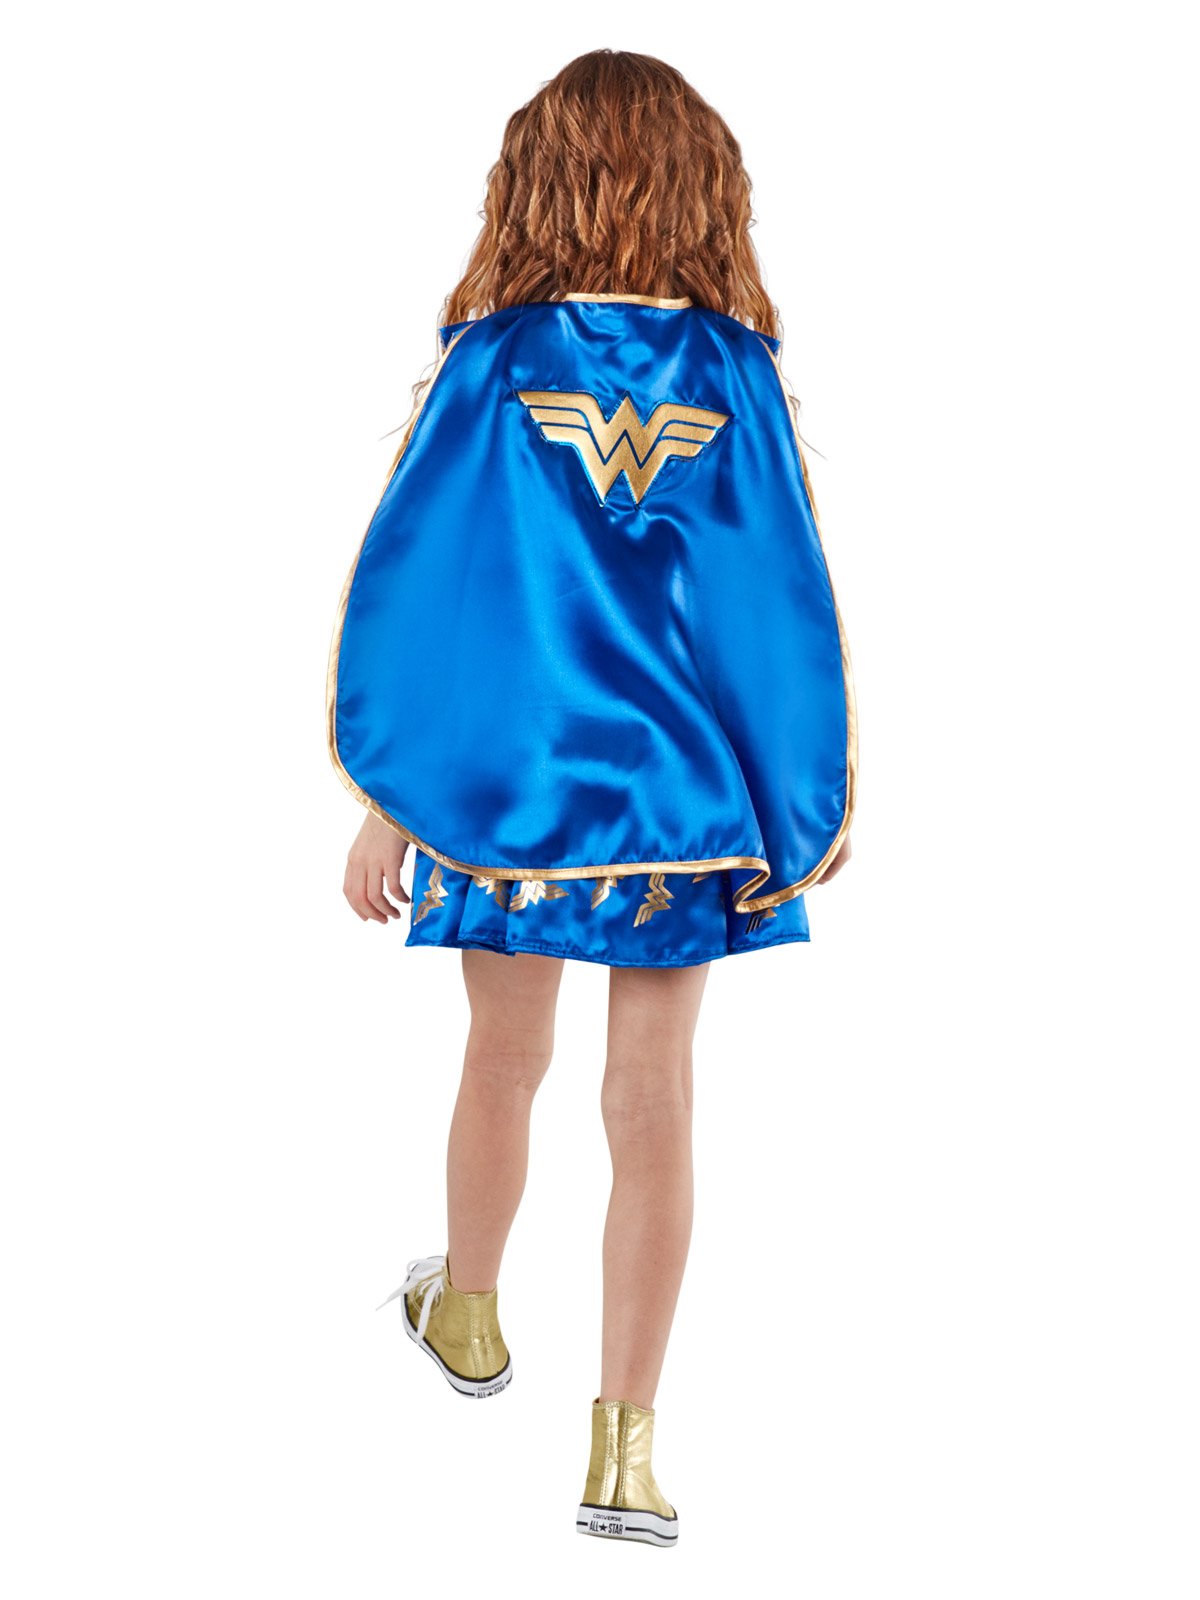 Costume Child Wonder Woman Deluxe